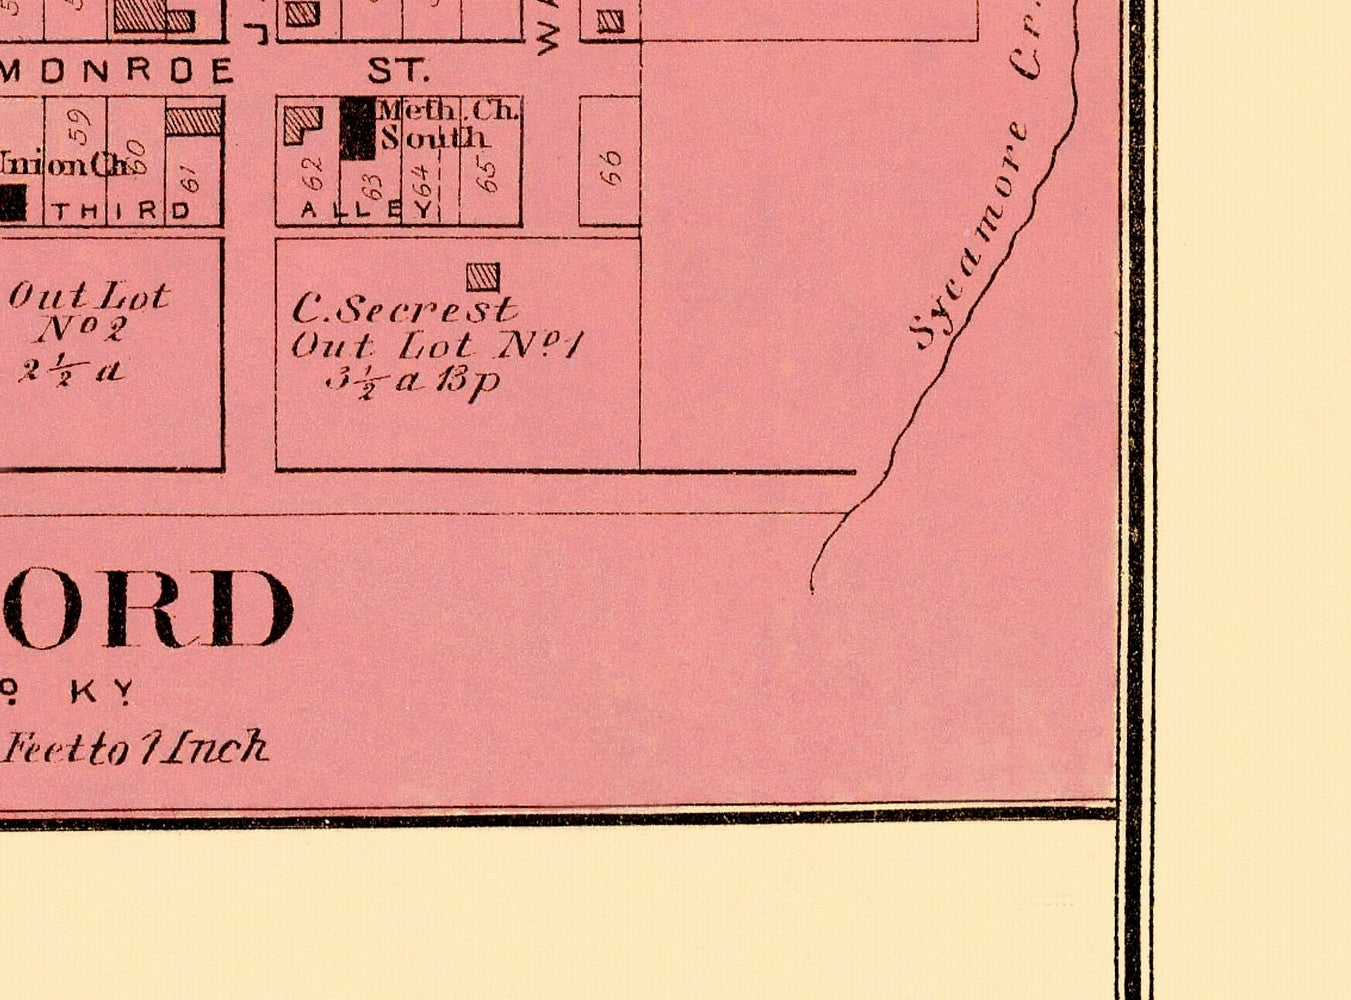 Historic City Map - Concord Kentucky - Titus 1877 - 23 x 31.09 - Vintage Wall Art